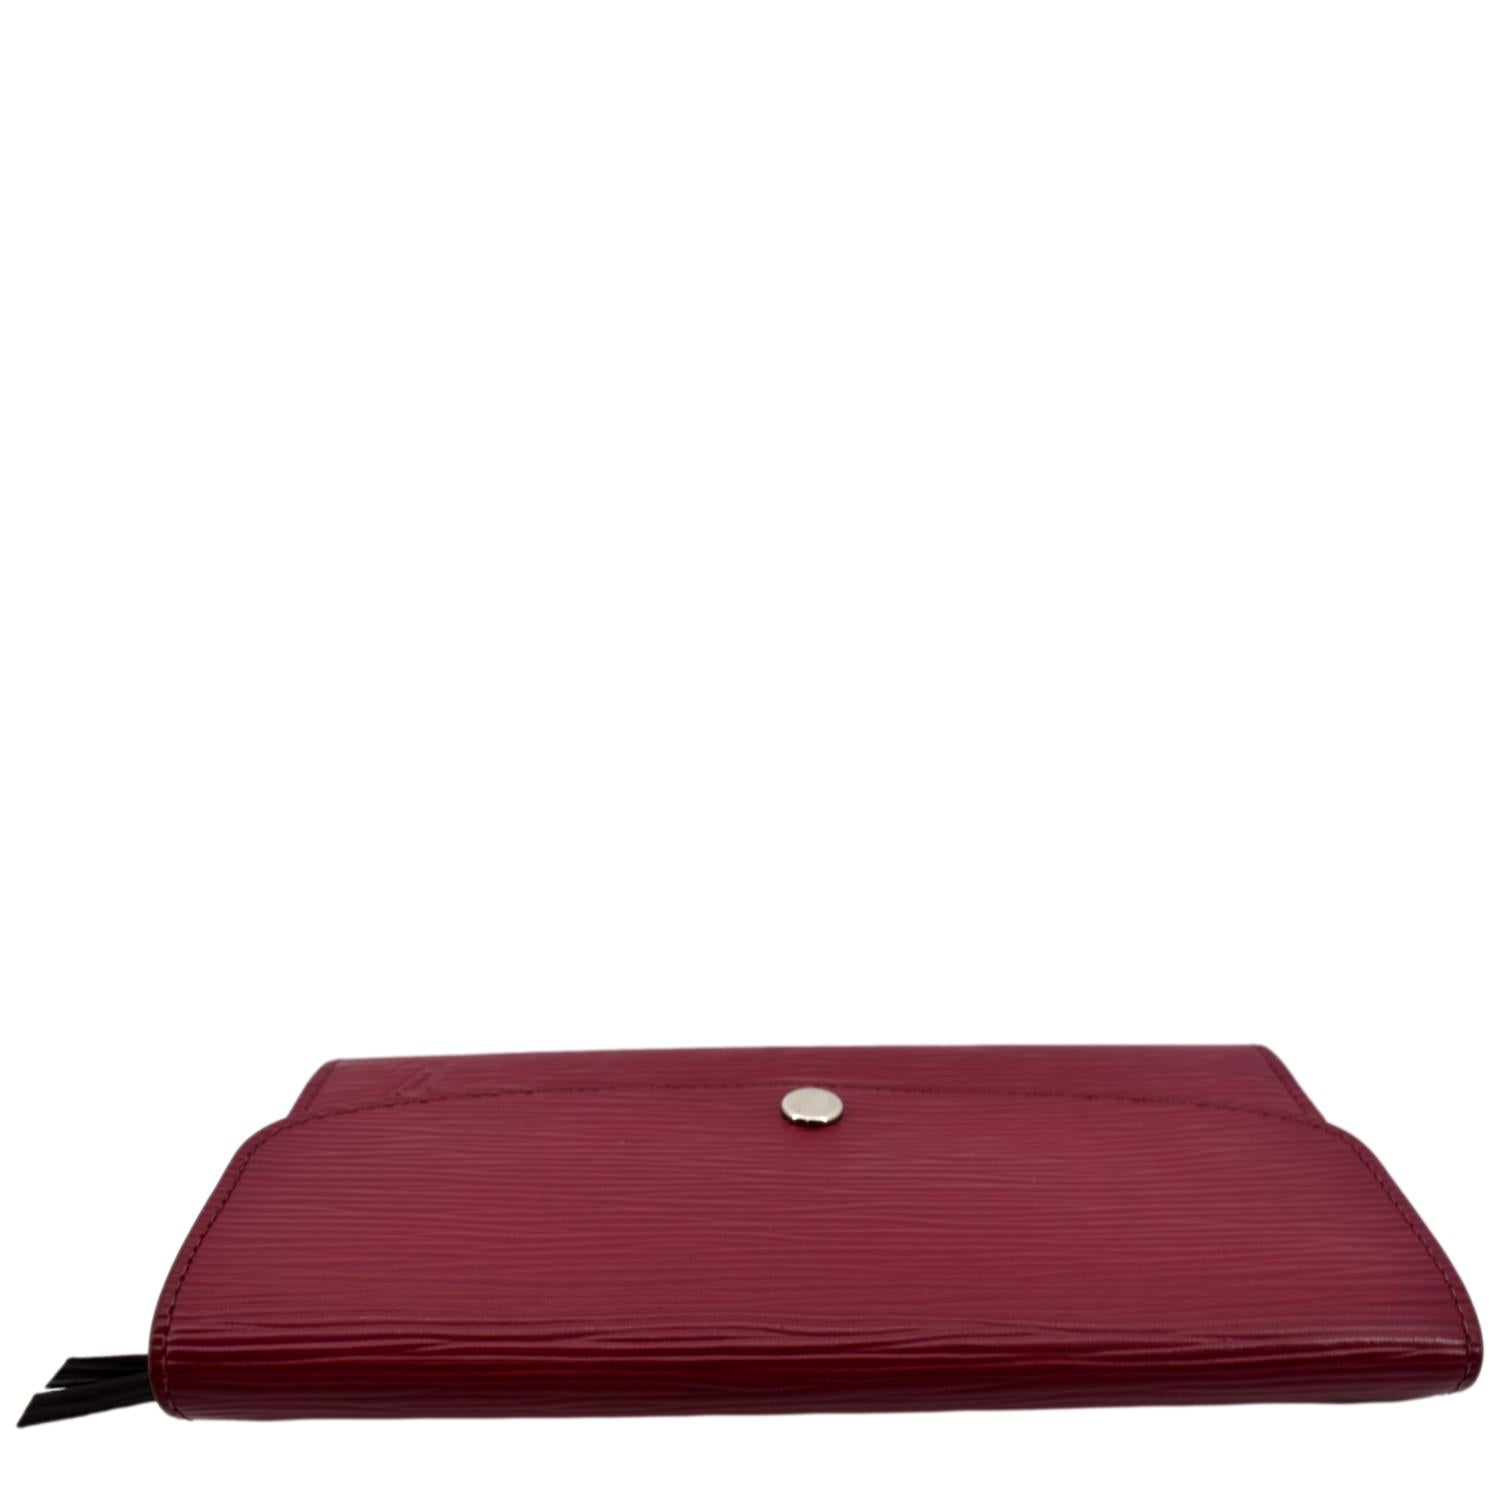 Louis Vuitton, Bags, Authentic Louis Vuitton Sarah Epi Leather Wallet  Fuchsia